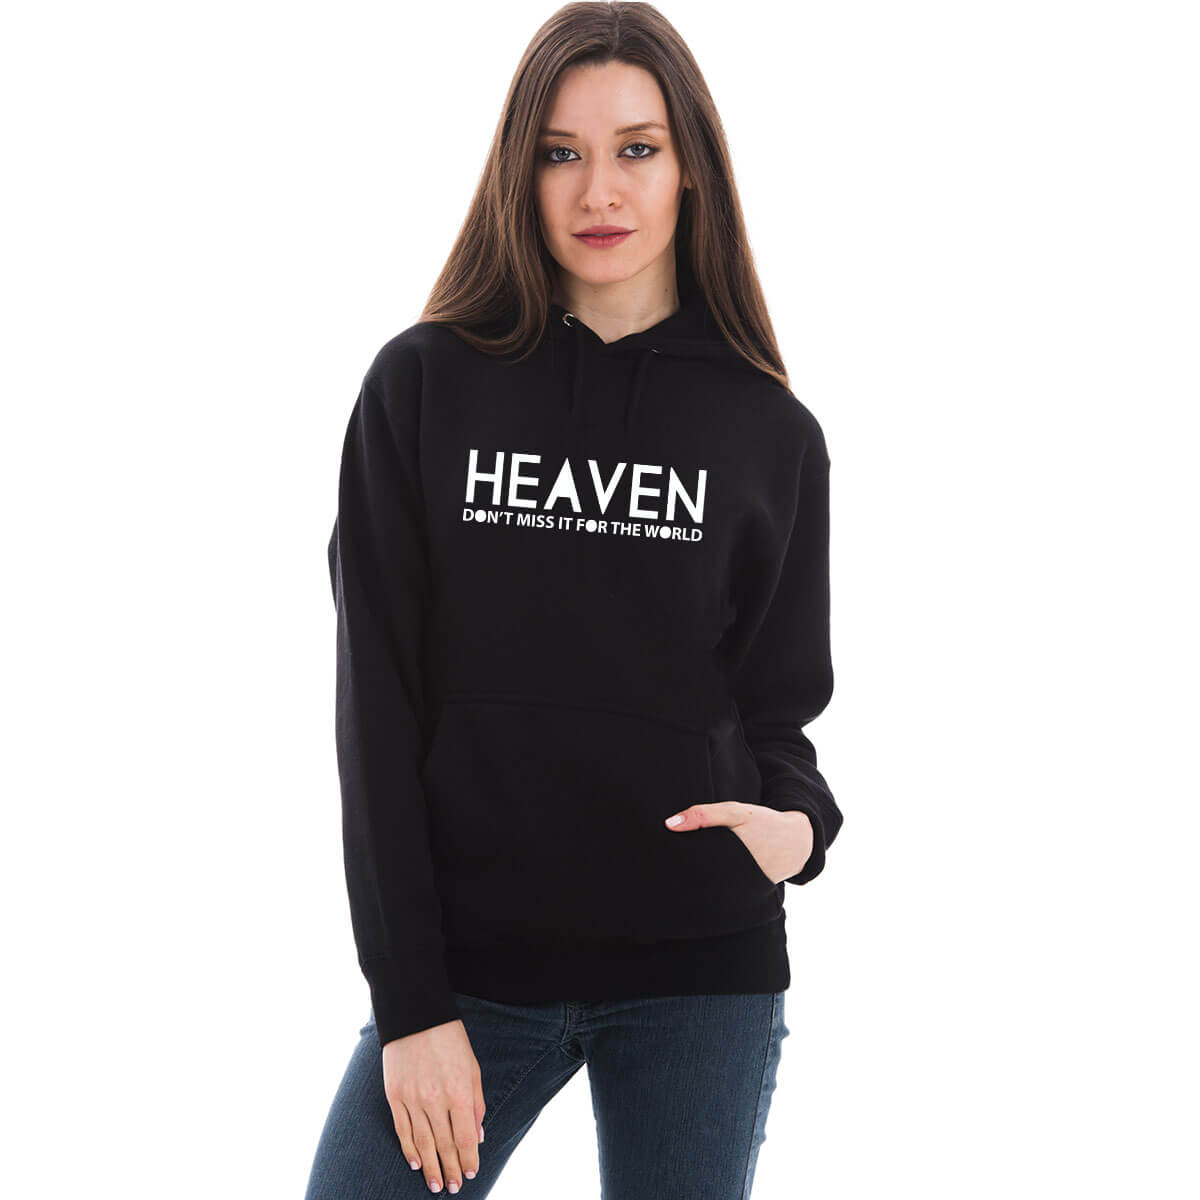 Heaven, Don't Miss It For The World Sweatshirt Hoodie